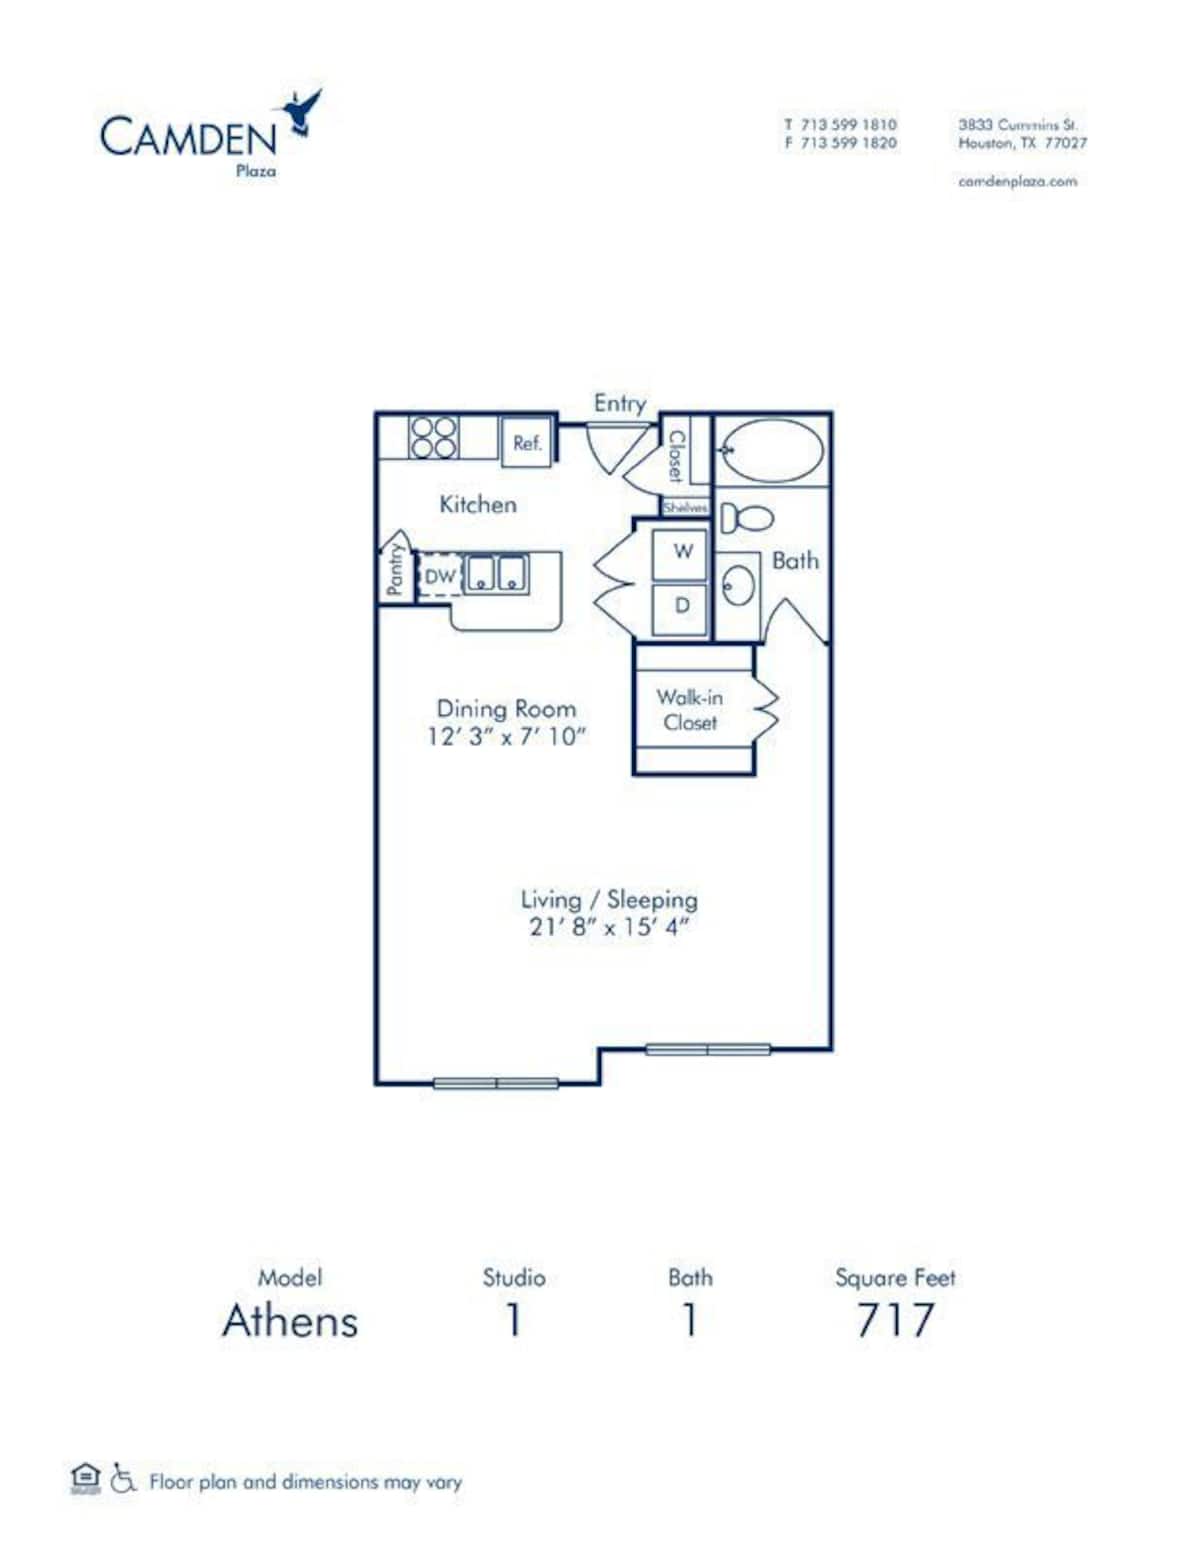 Floorplan diagram for Athens, showing Studio